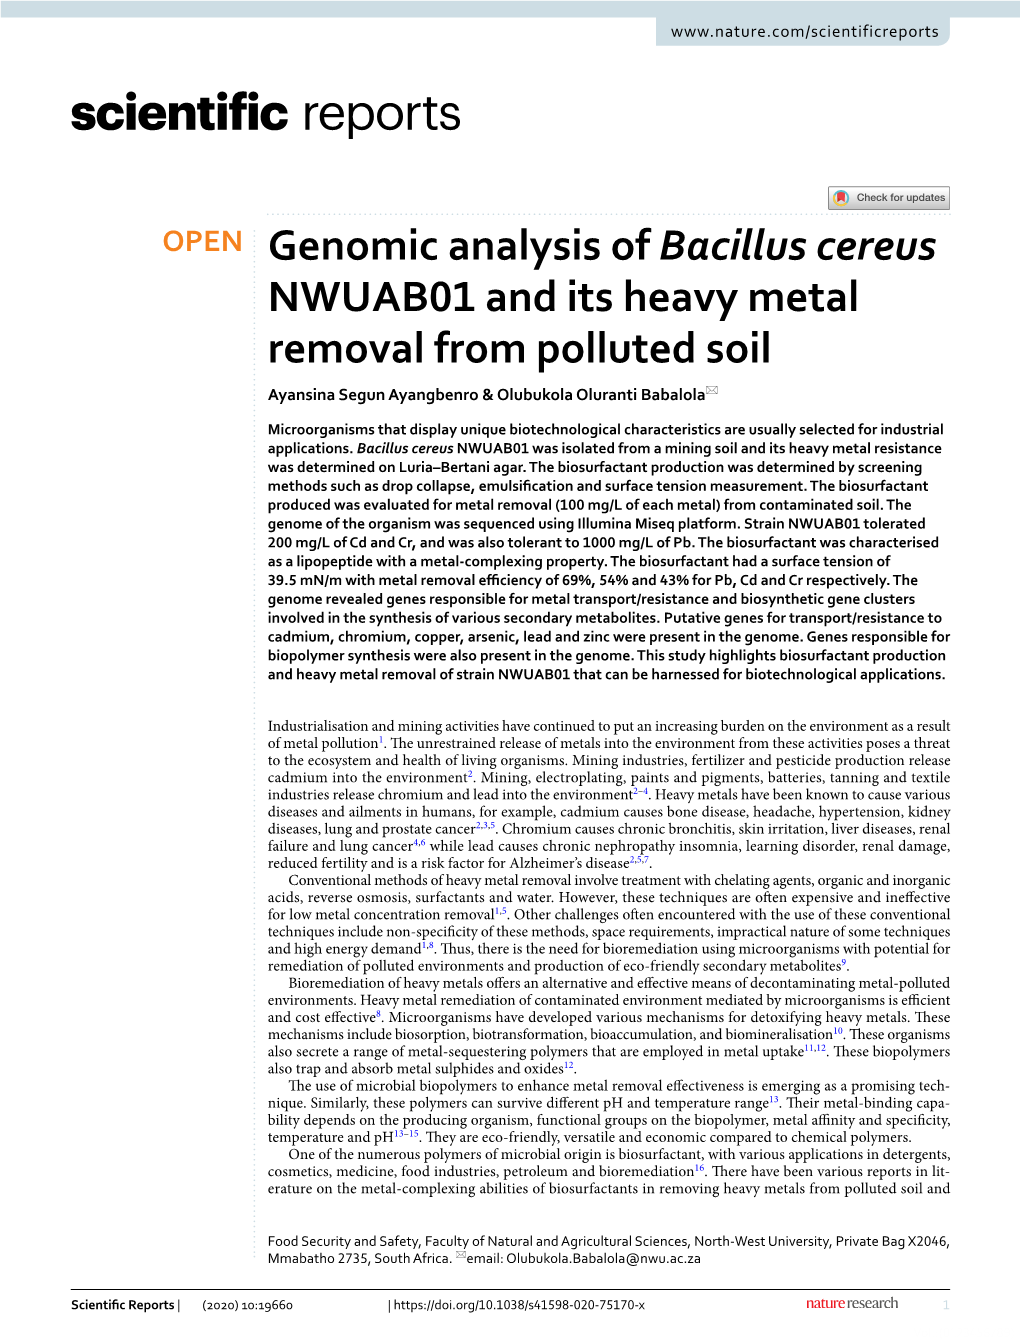 Genomic Analysis of Bacillus Cereus NWUAB01 and Its Heavy Metal Removal from Polluted Soil Ayansina Segun Ayangbenro & Olubukola Oluranti Babalola*